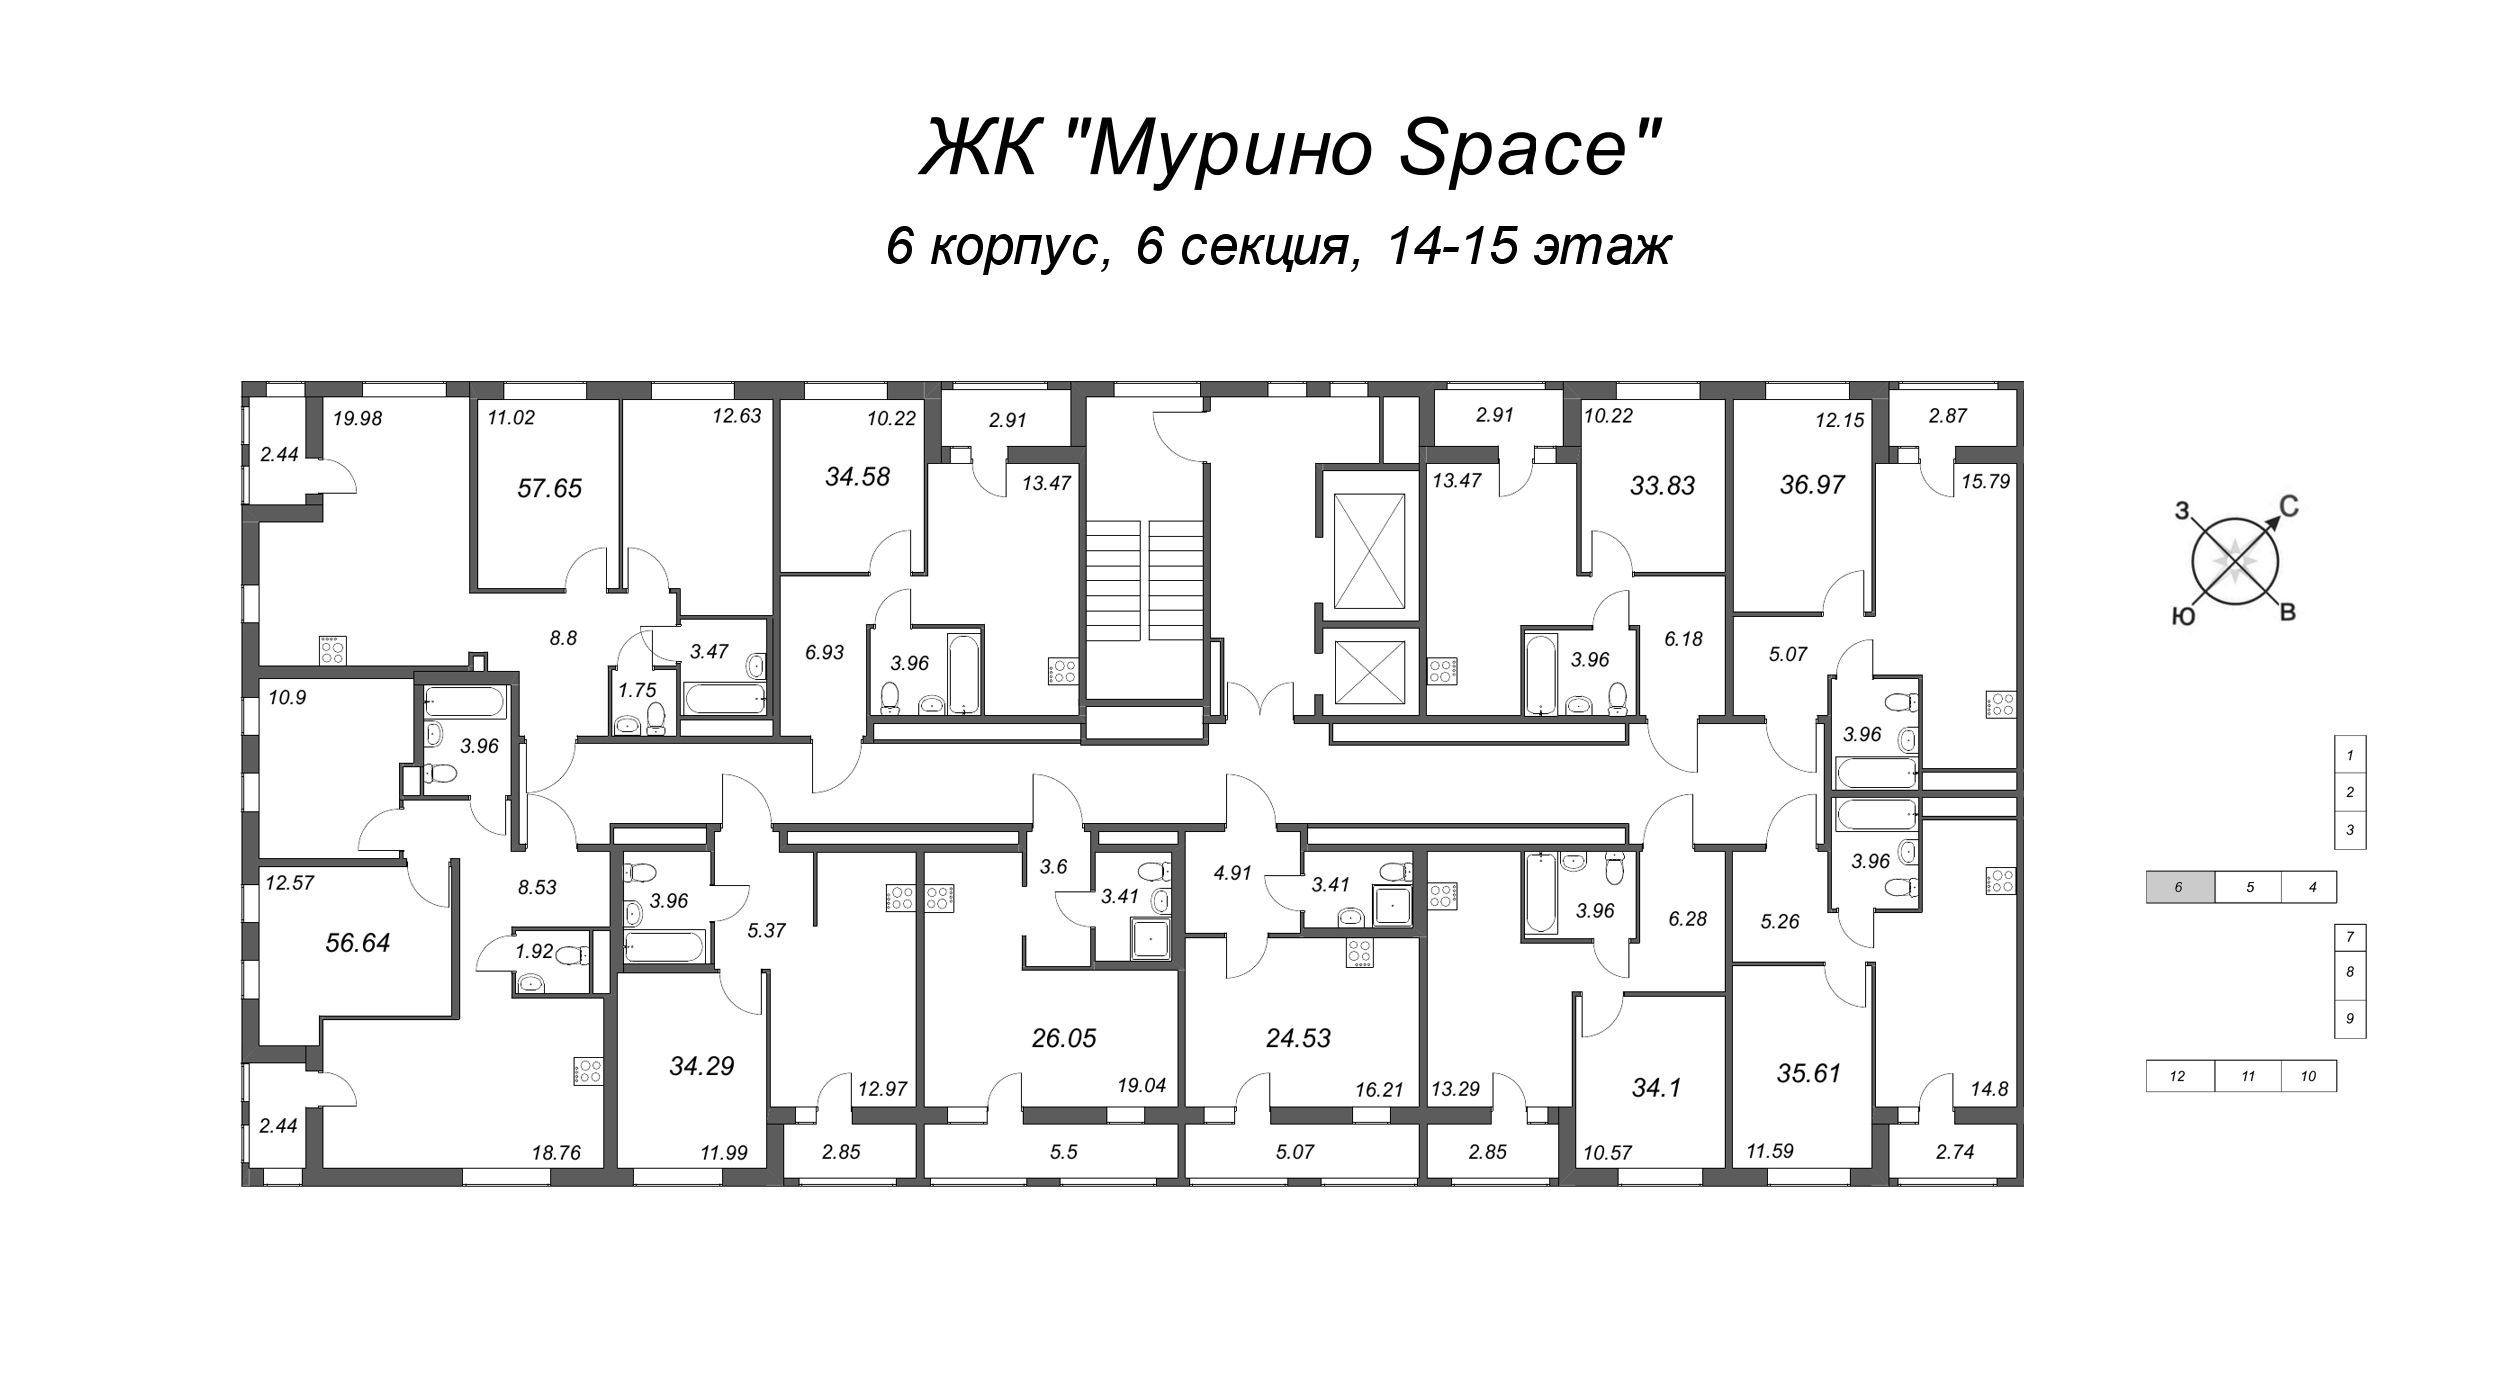 3-комнатная (Евро) квартира, 57.65 м² в ЖК "Мурино Space" - планировка этажа